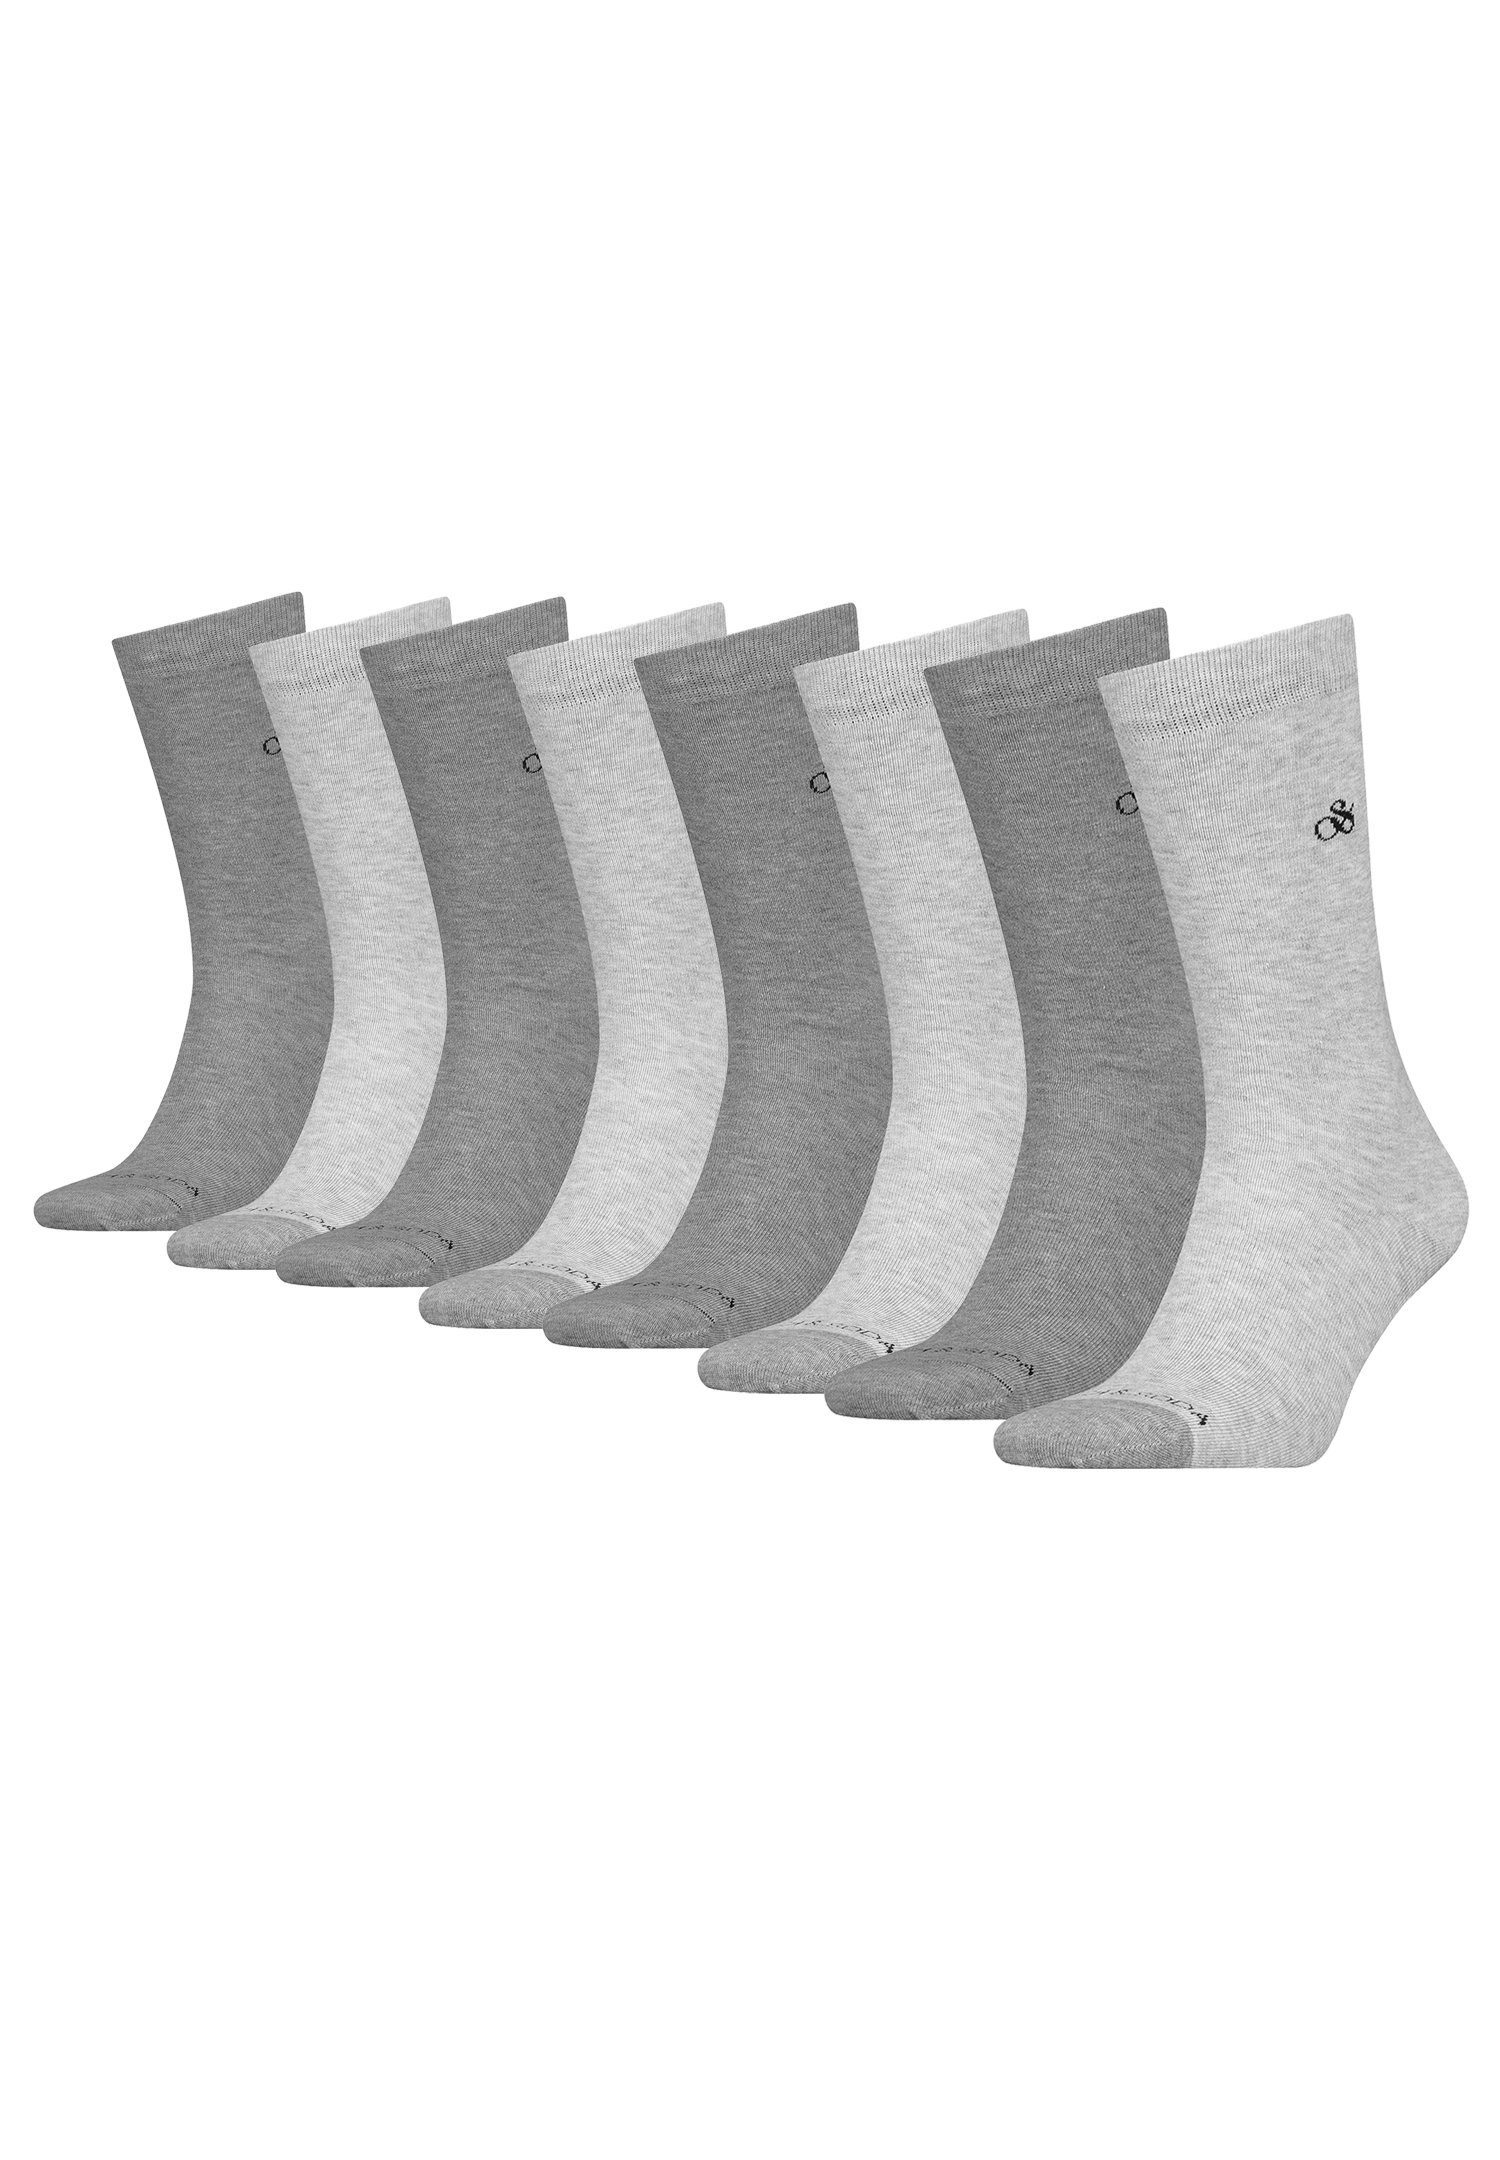 grey Dip Soda CLASSIC Socks melange 032 Toe SCSO (8-Paar) 8P - Scotch & Kurzsocken